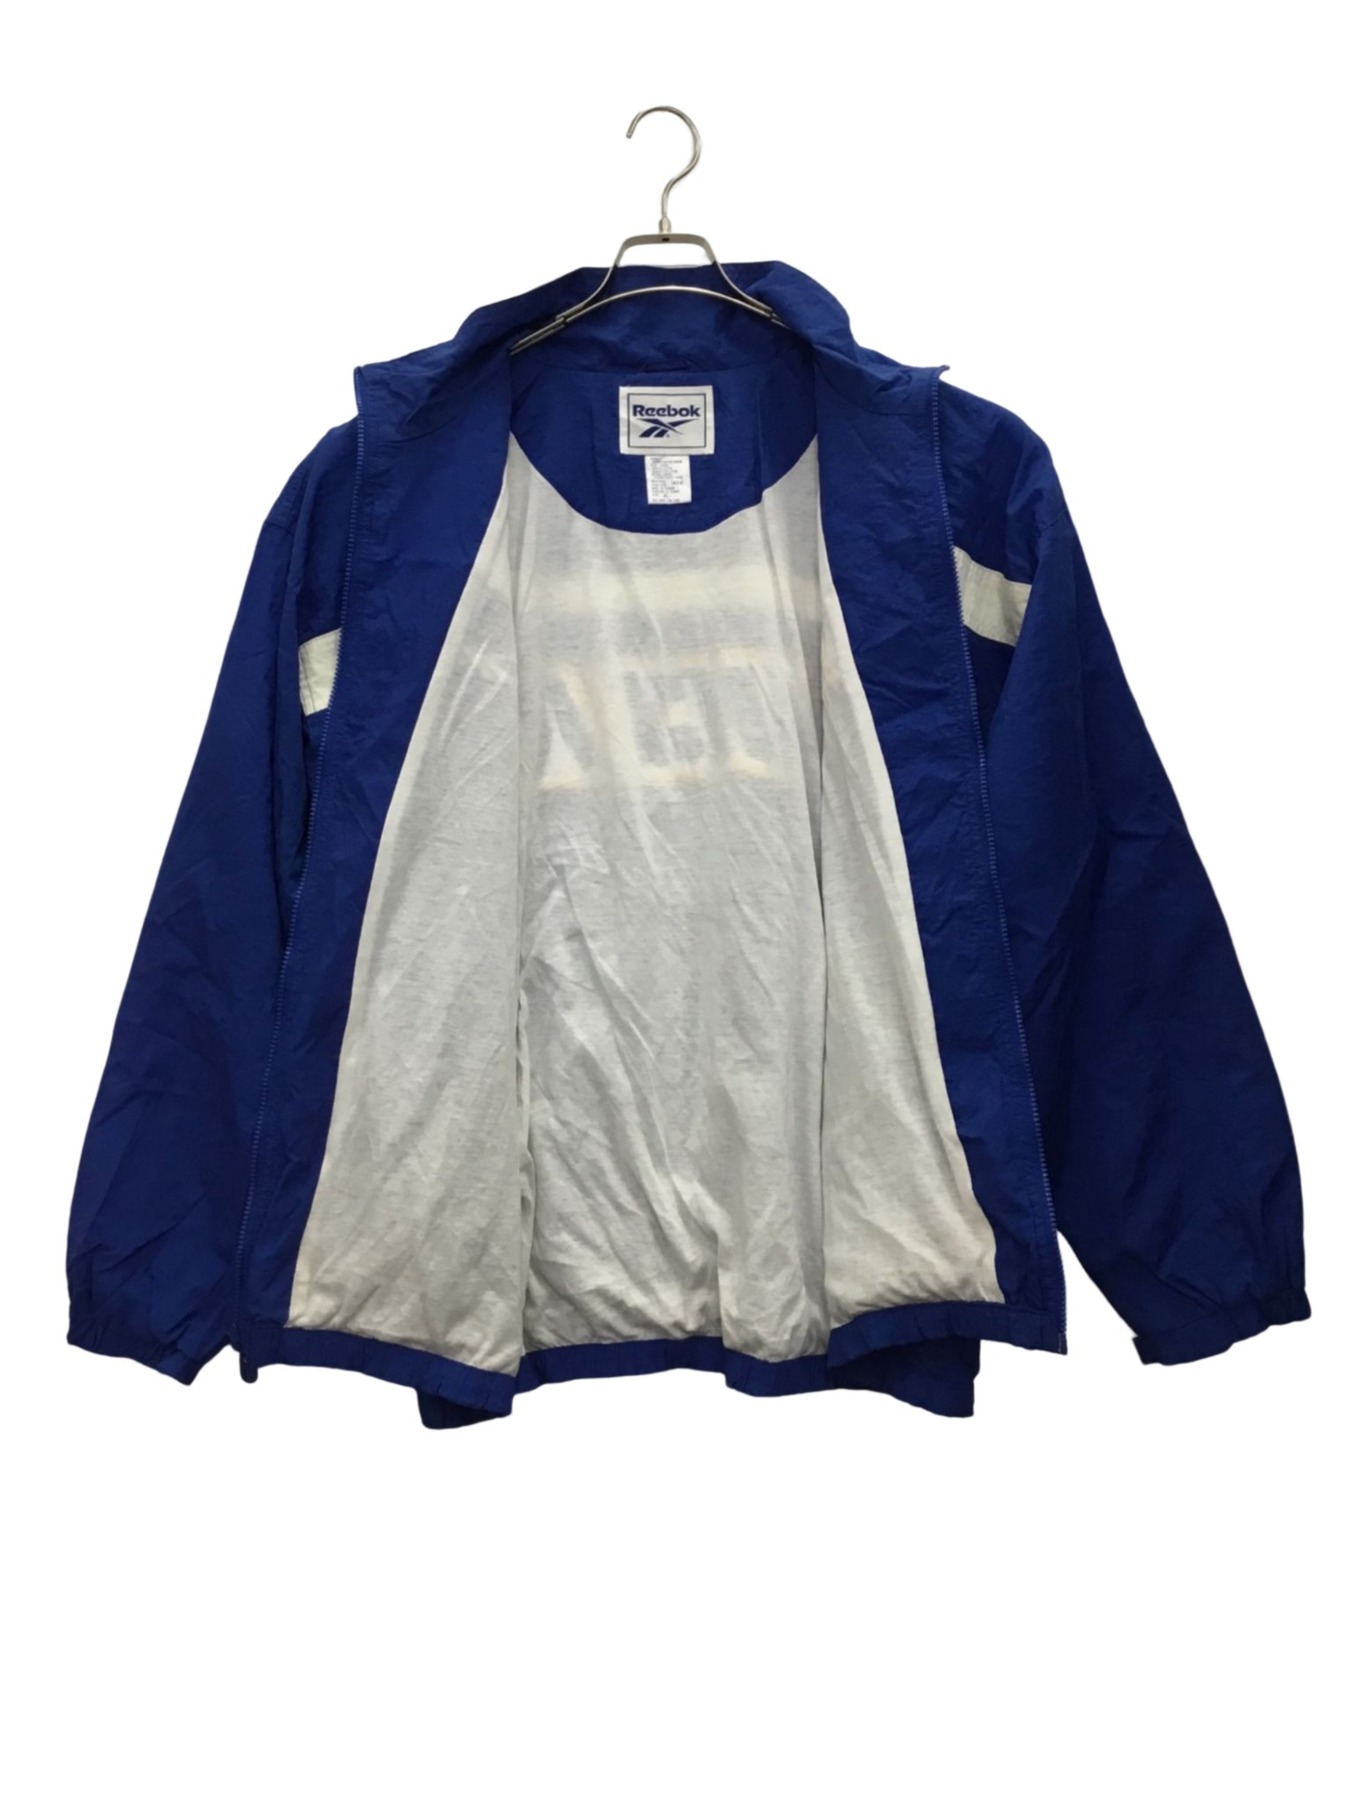 REEBOK (リーボック) ナイロンジャケット ブルー×ホワイト サイズ:XL